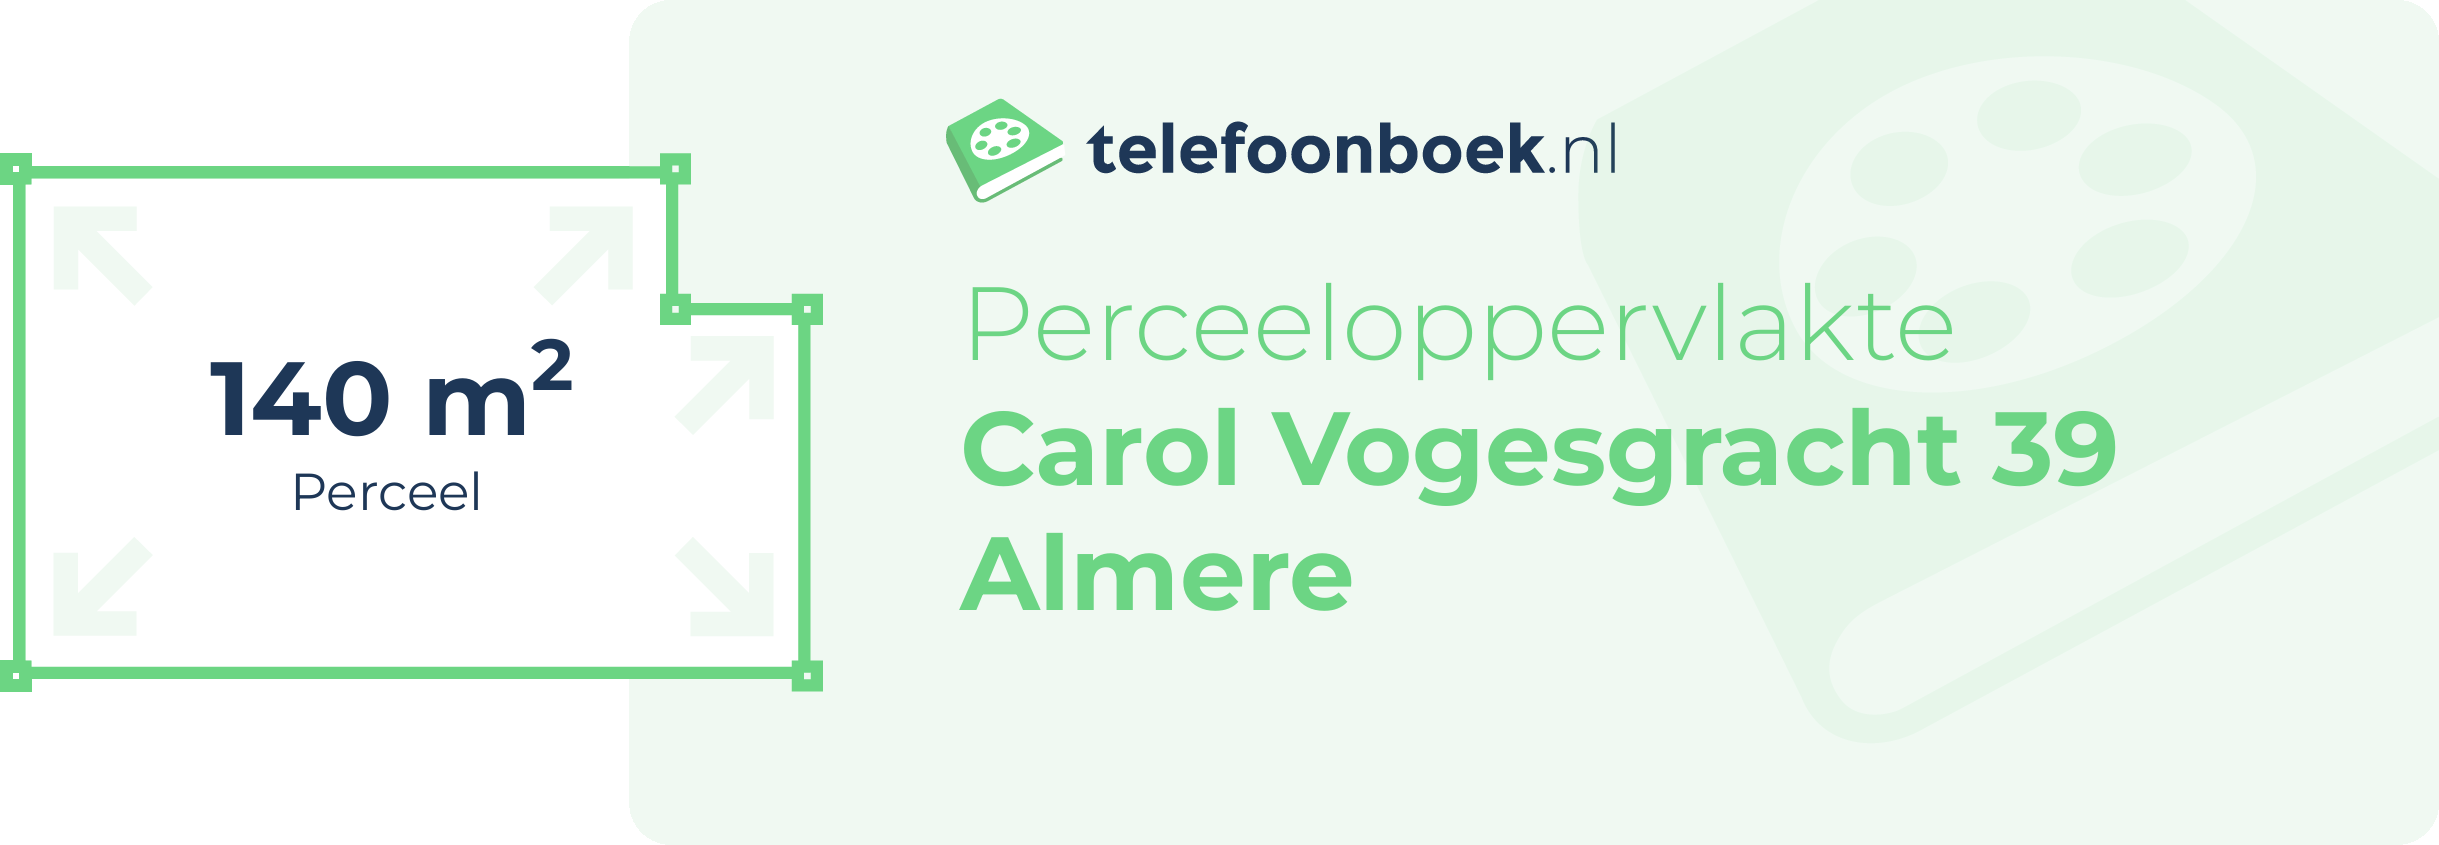 Perceeloppervlakte Carol Vogesgracht 39 Almere